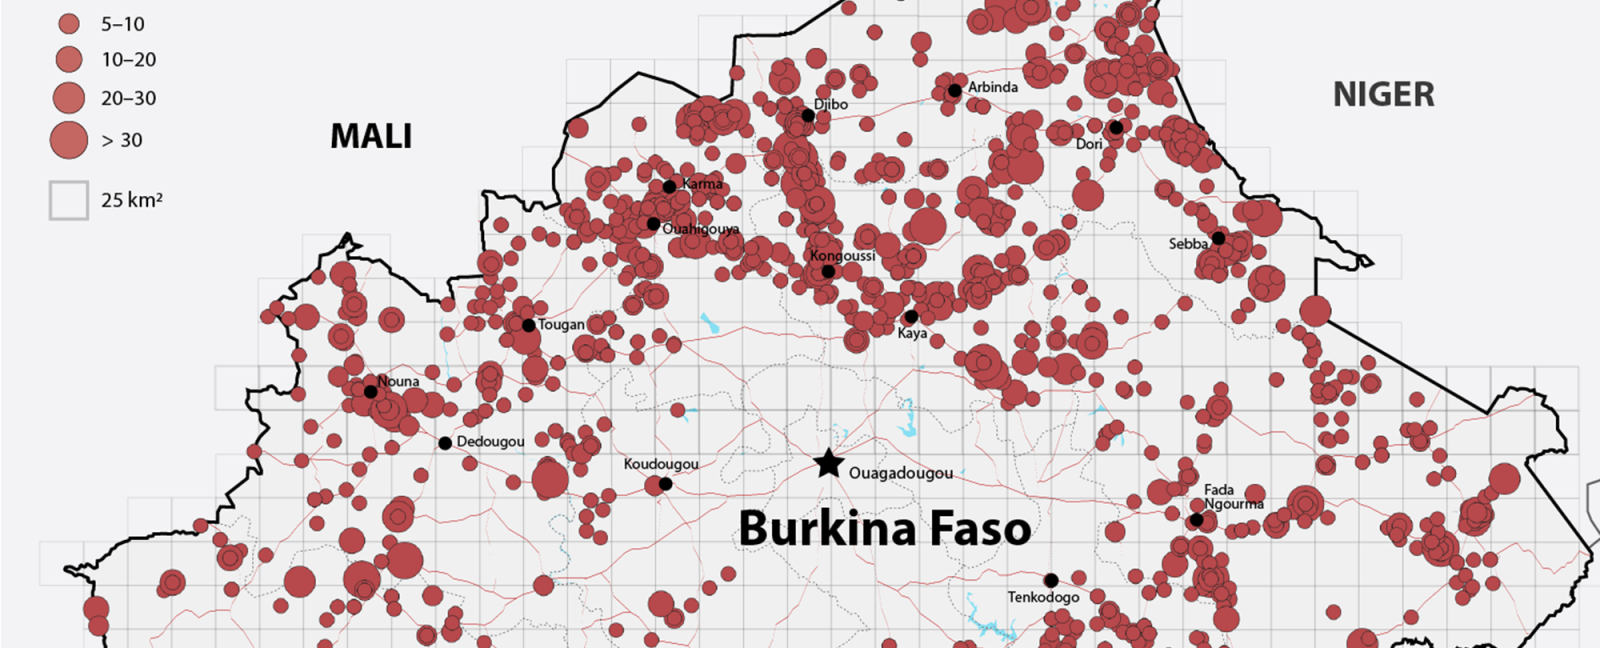 La crise au Burkina Faso continue son engrenage